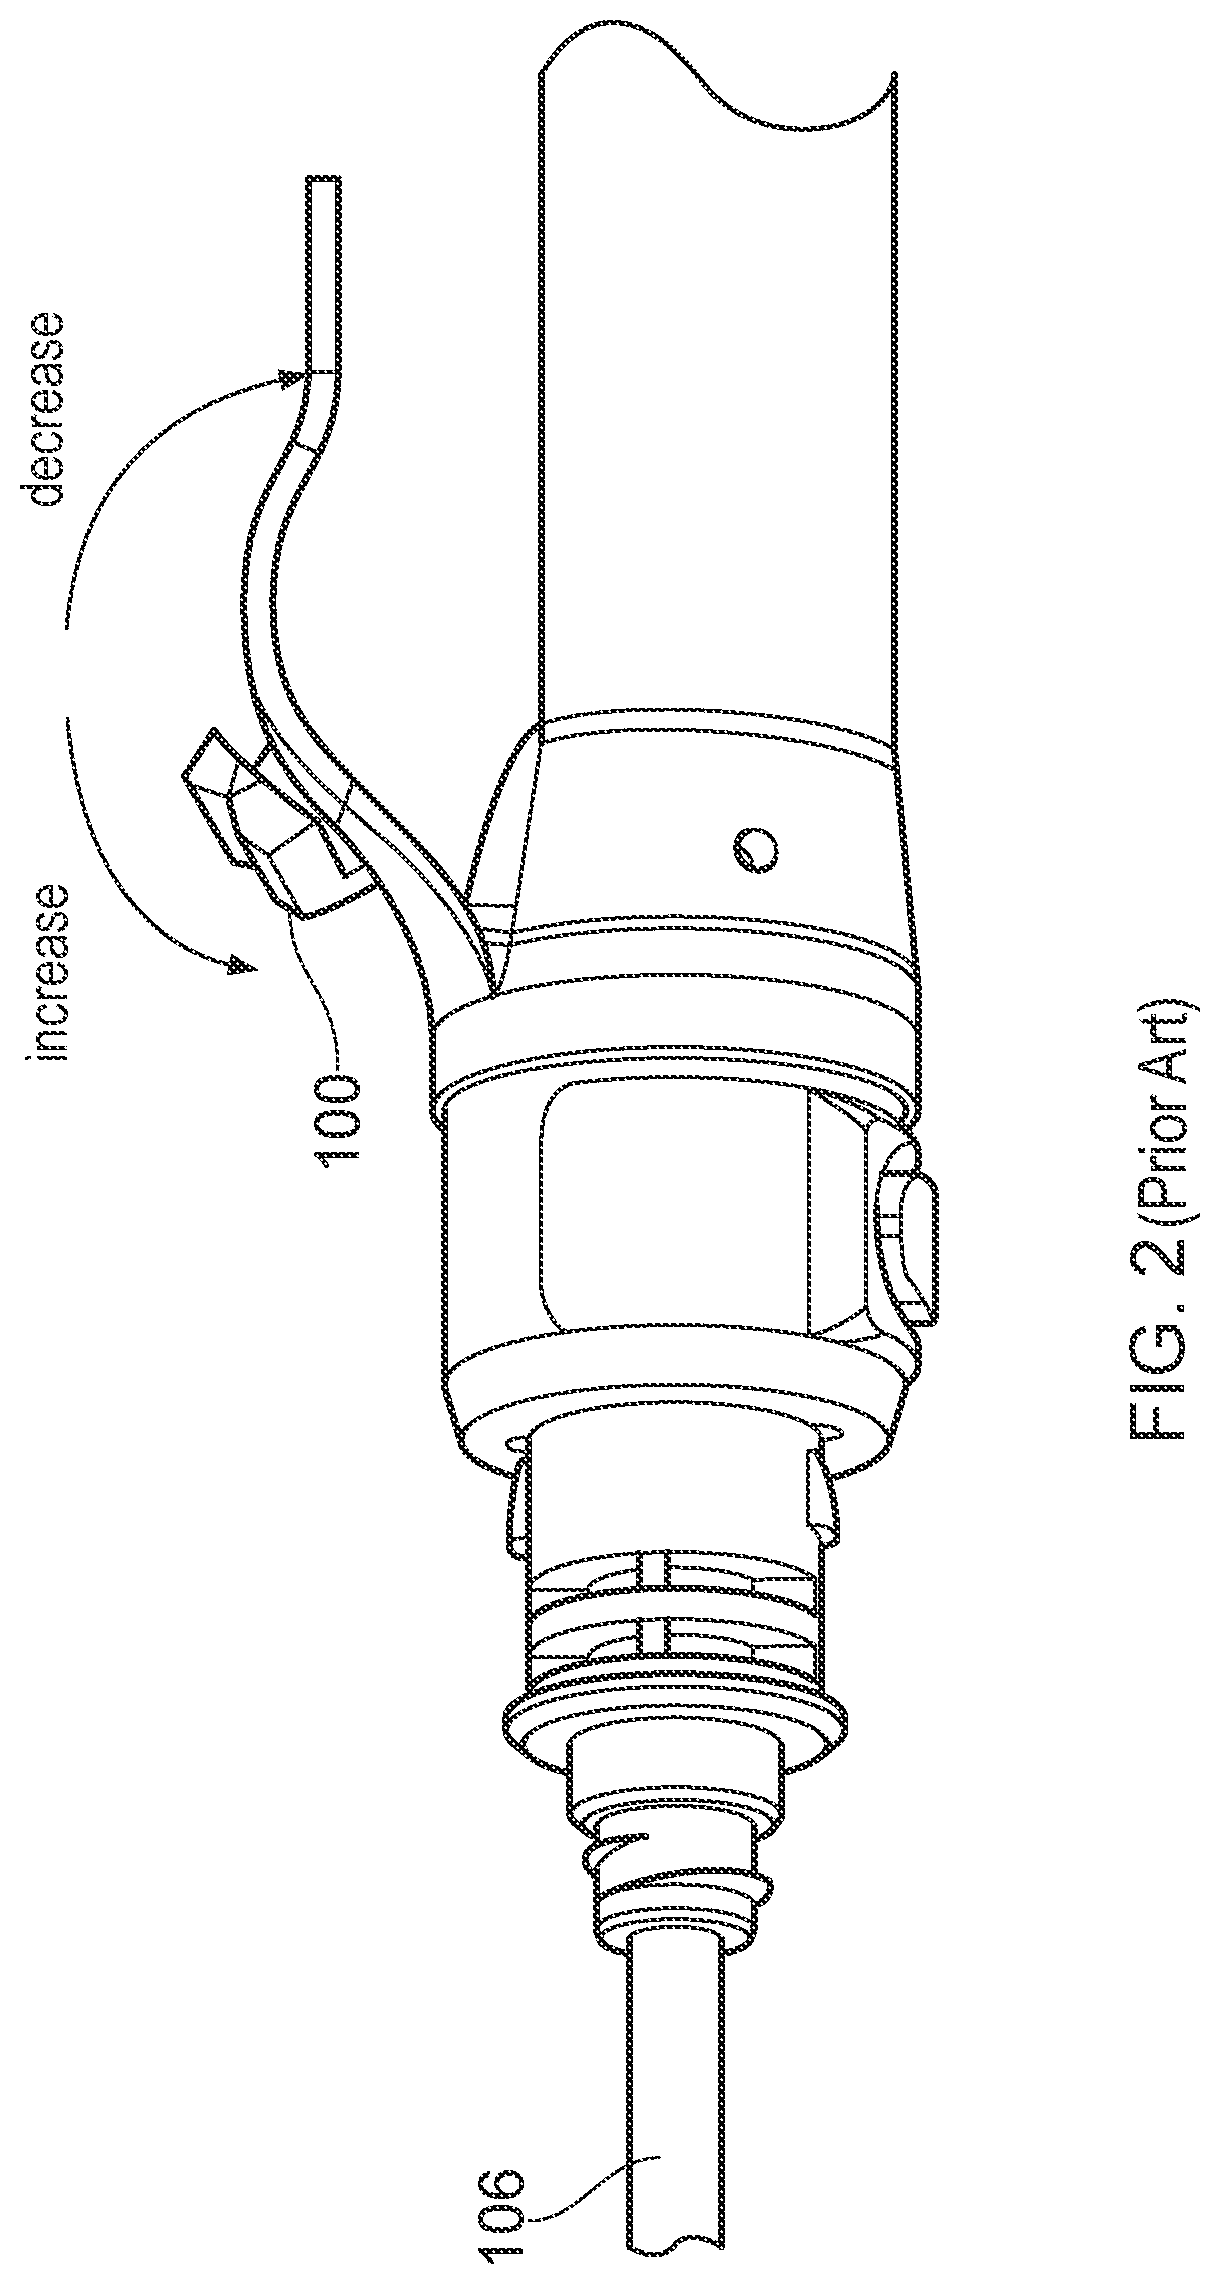 Flow valve position sensor for an electrosurgical device